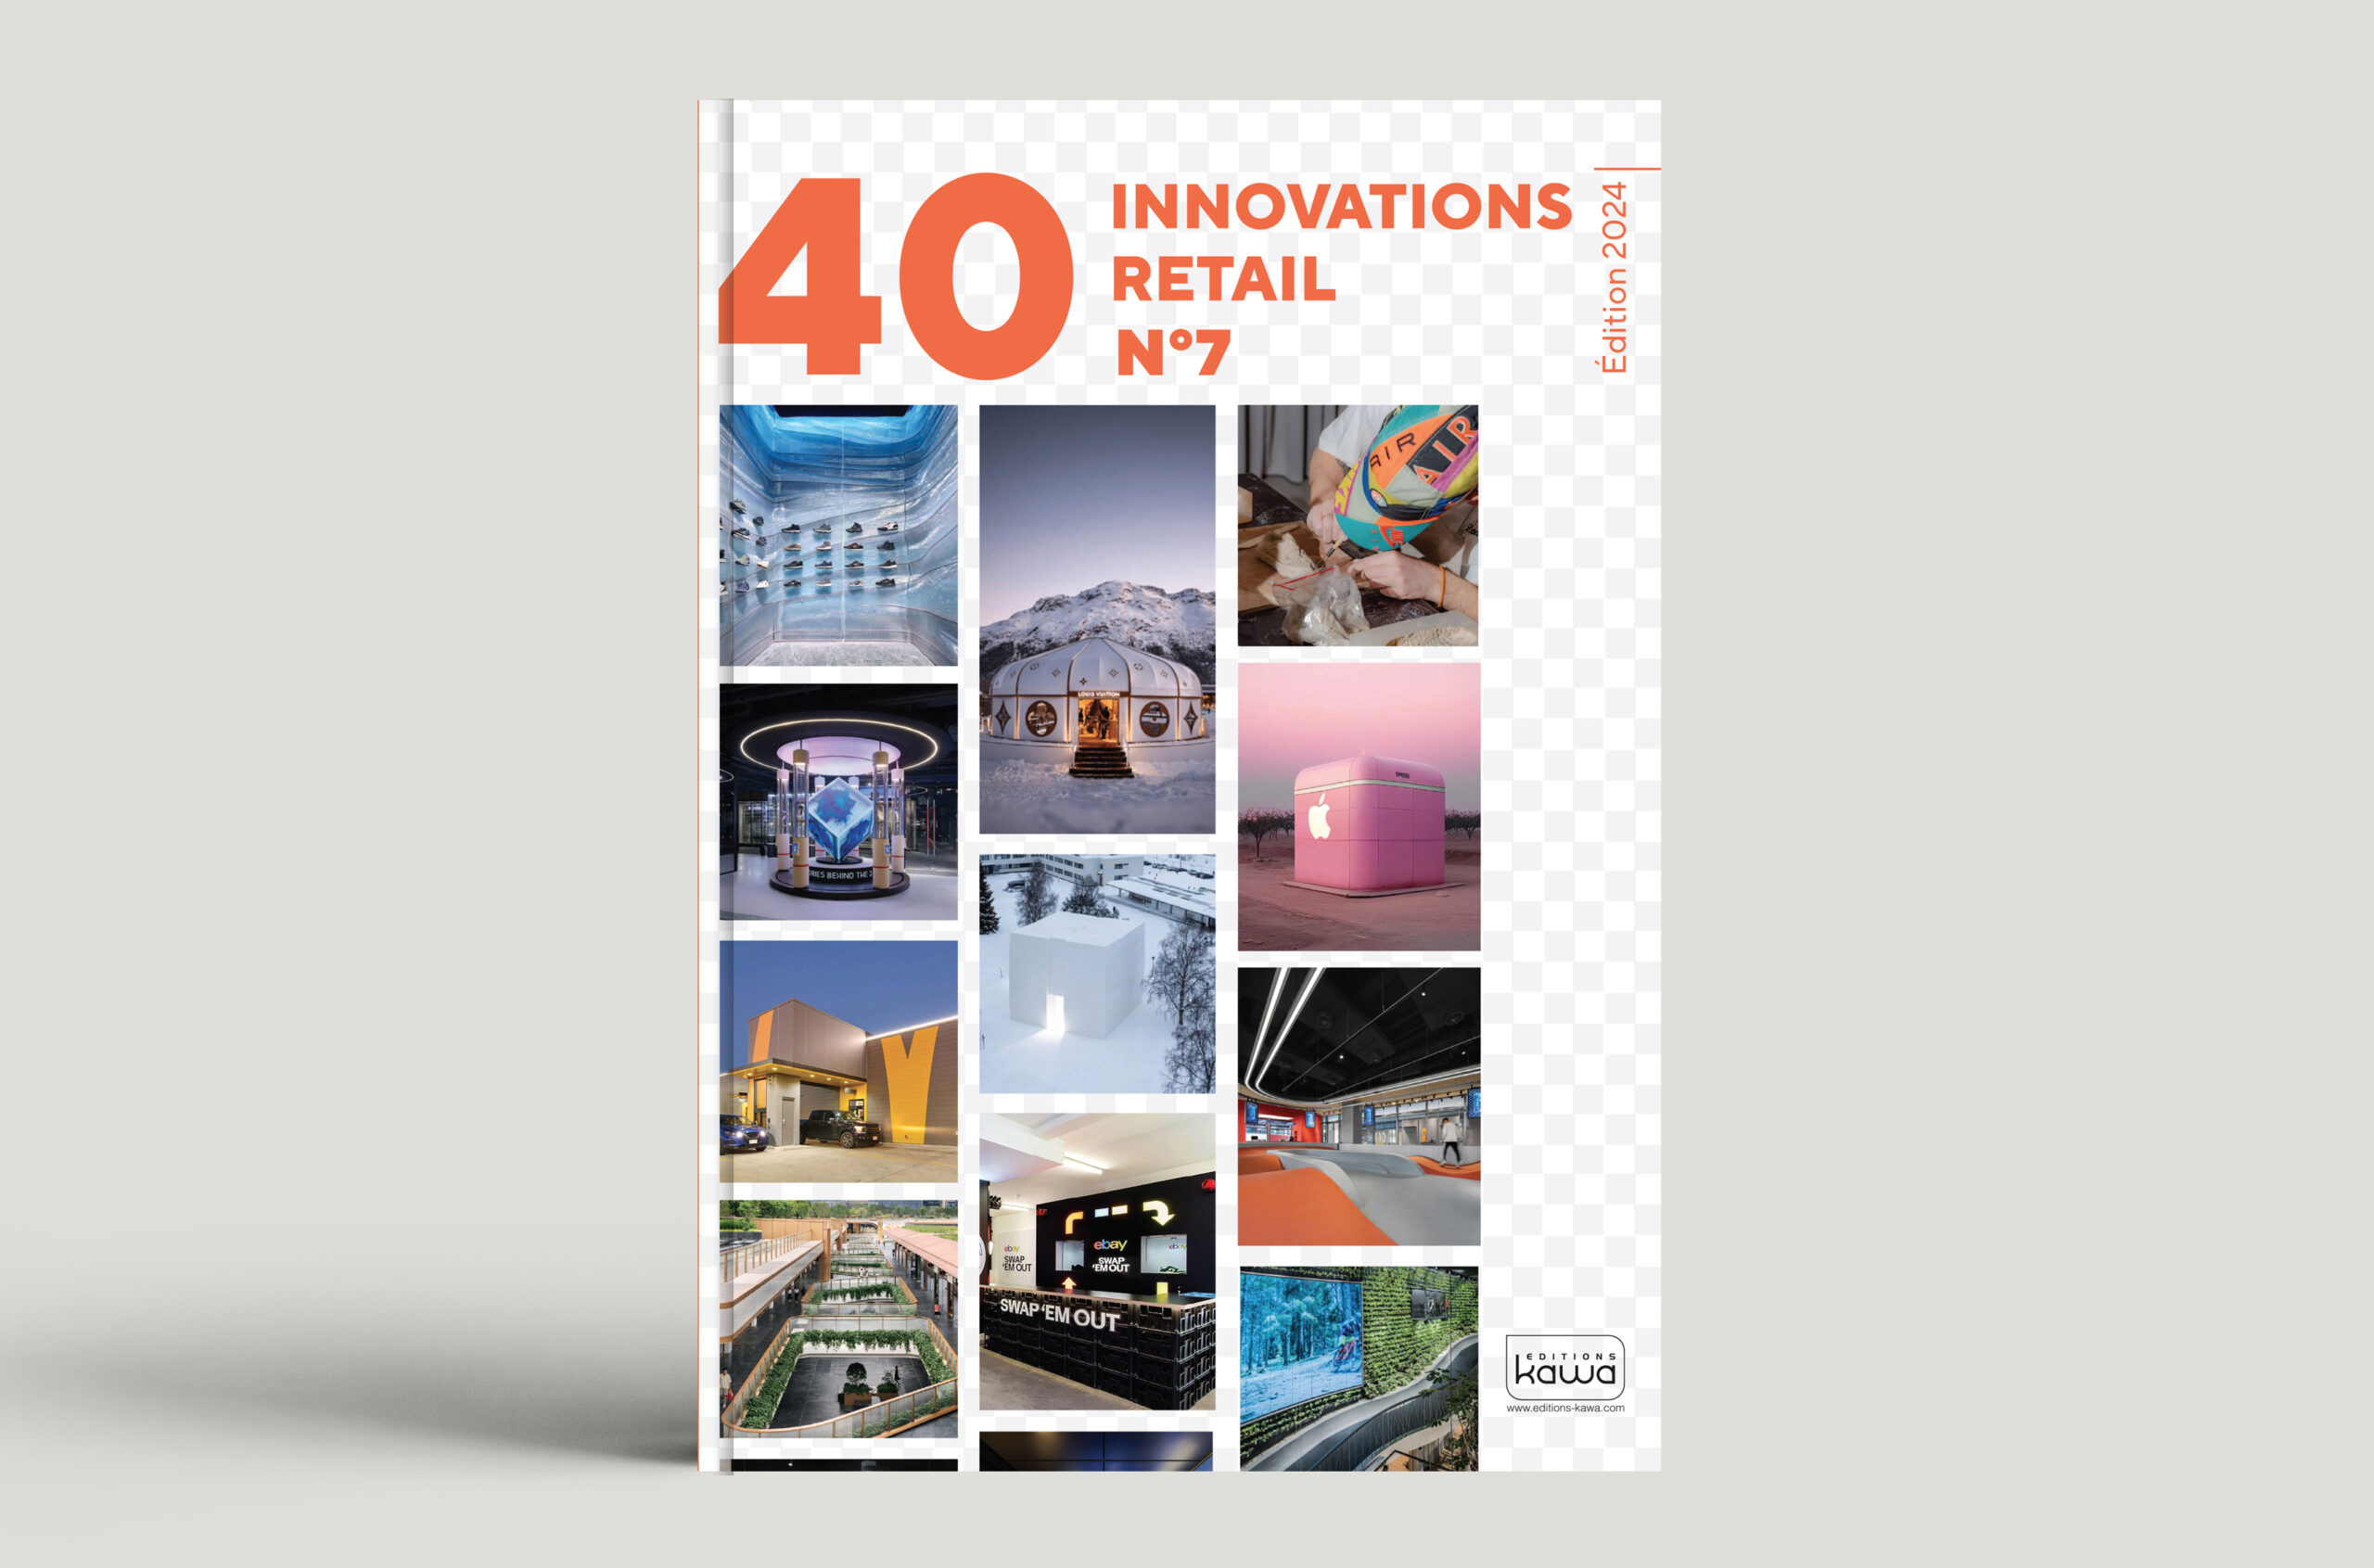 40 innovations retail N°7